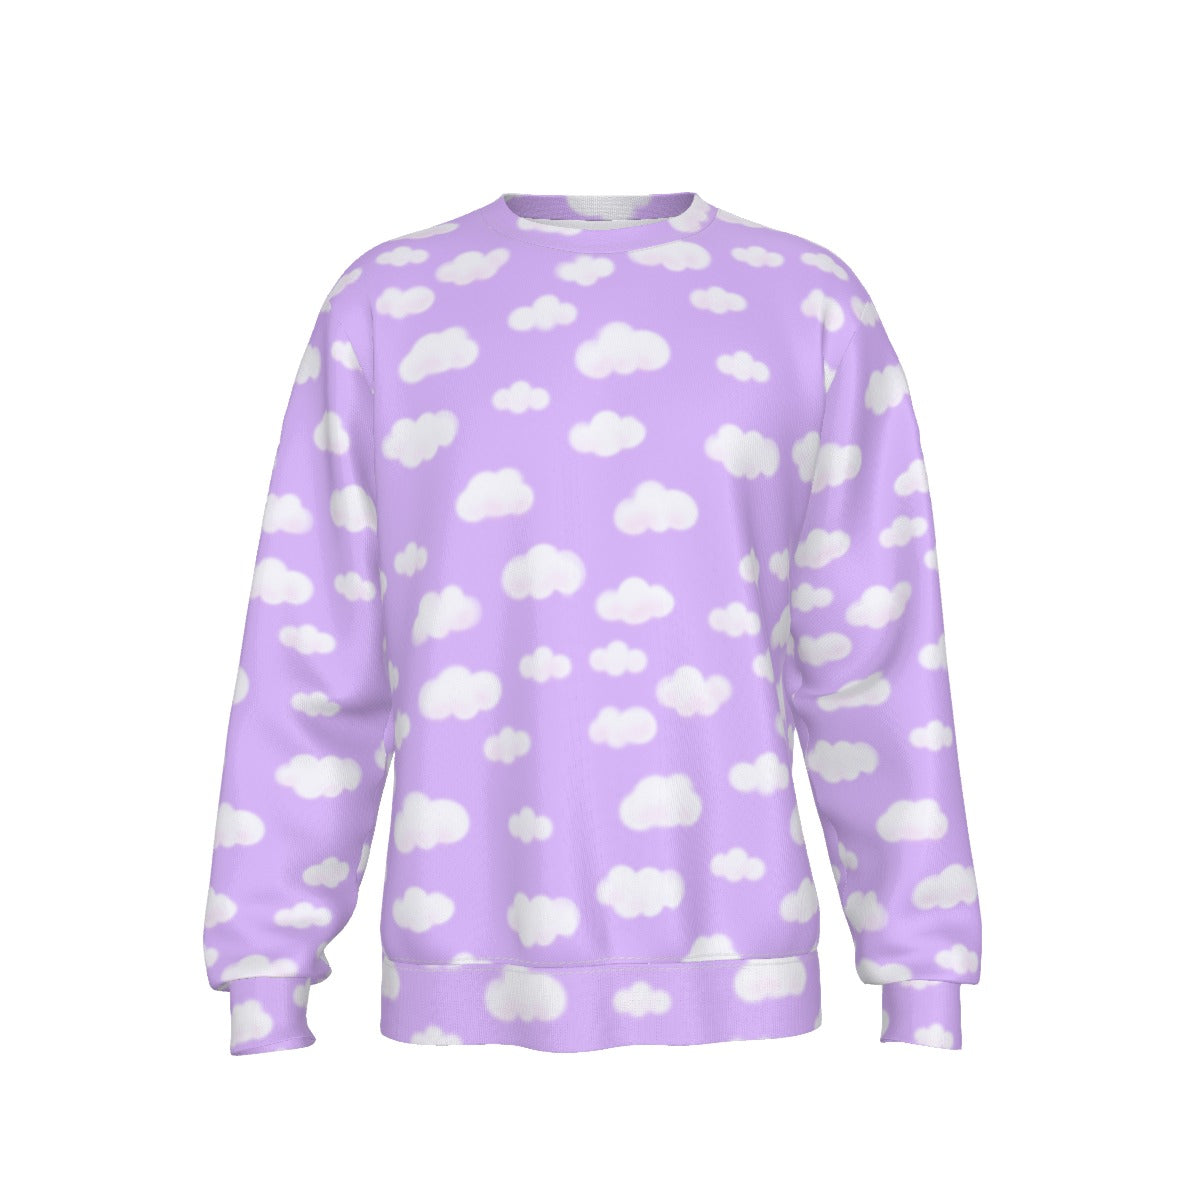 Dreamy Clouds Men's Sweatshirt (Lilac)